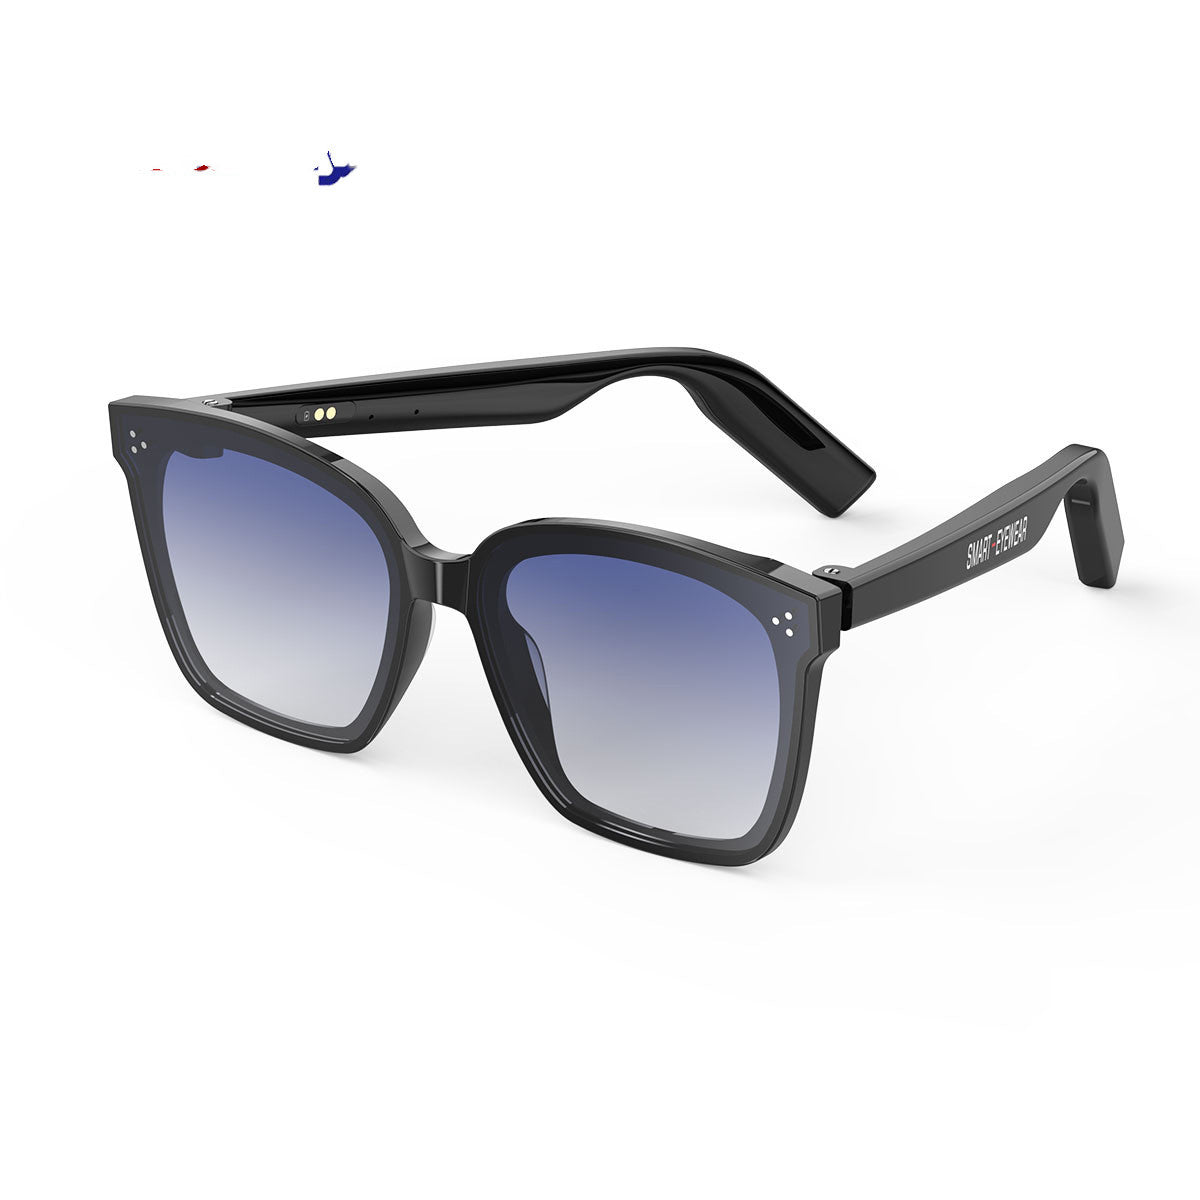 Black technology UV protection sunglasses